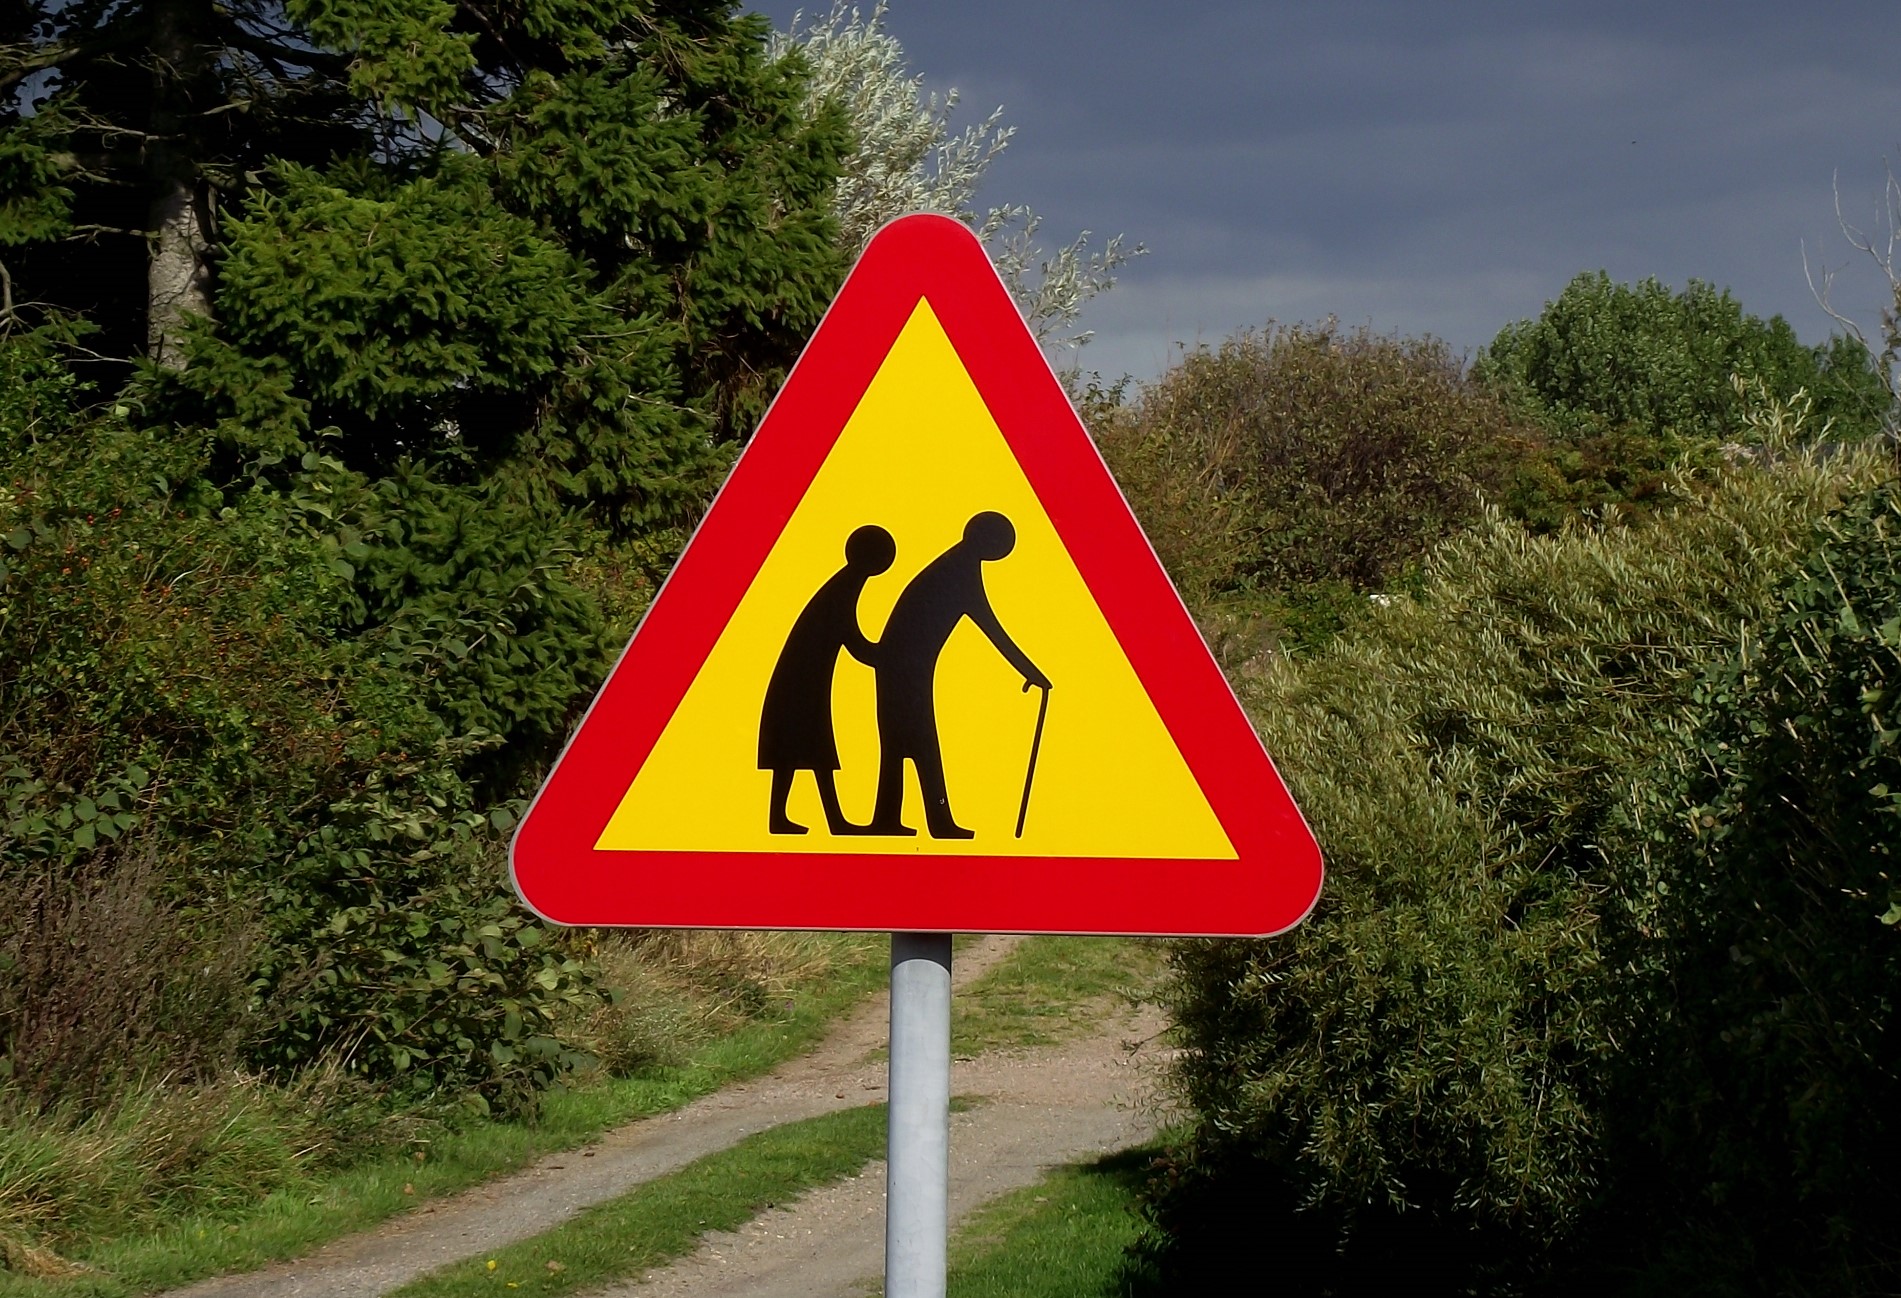 Caution elderly people / Image: David J, Flickr